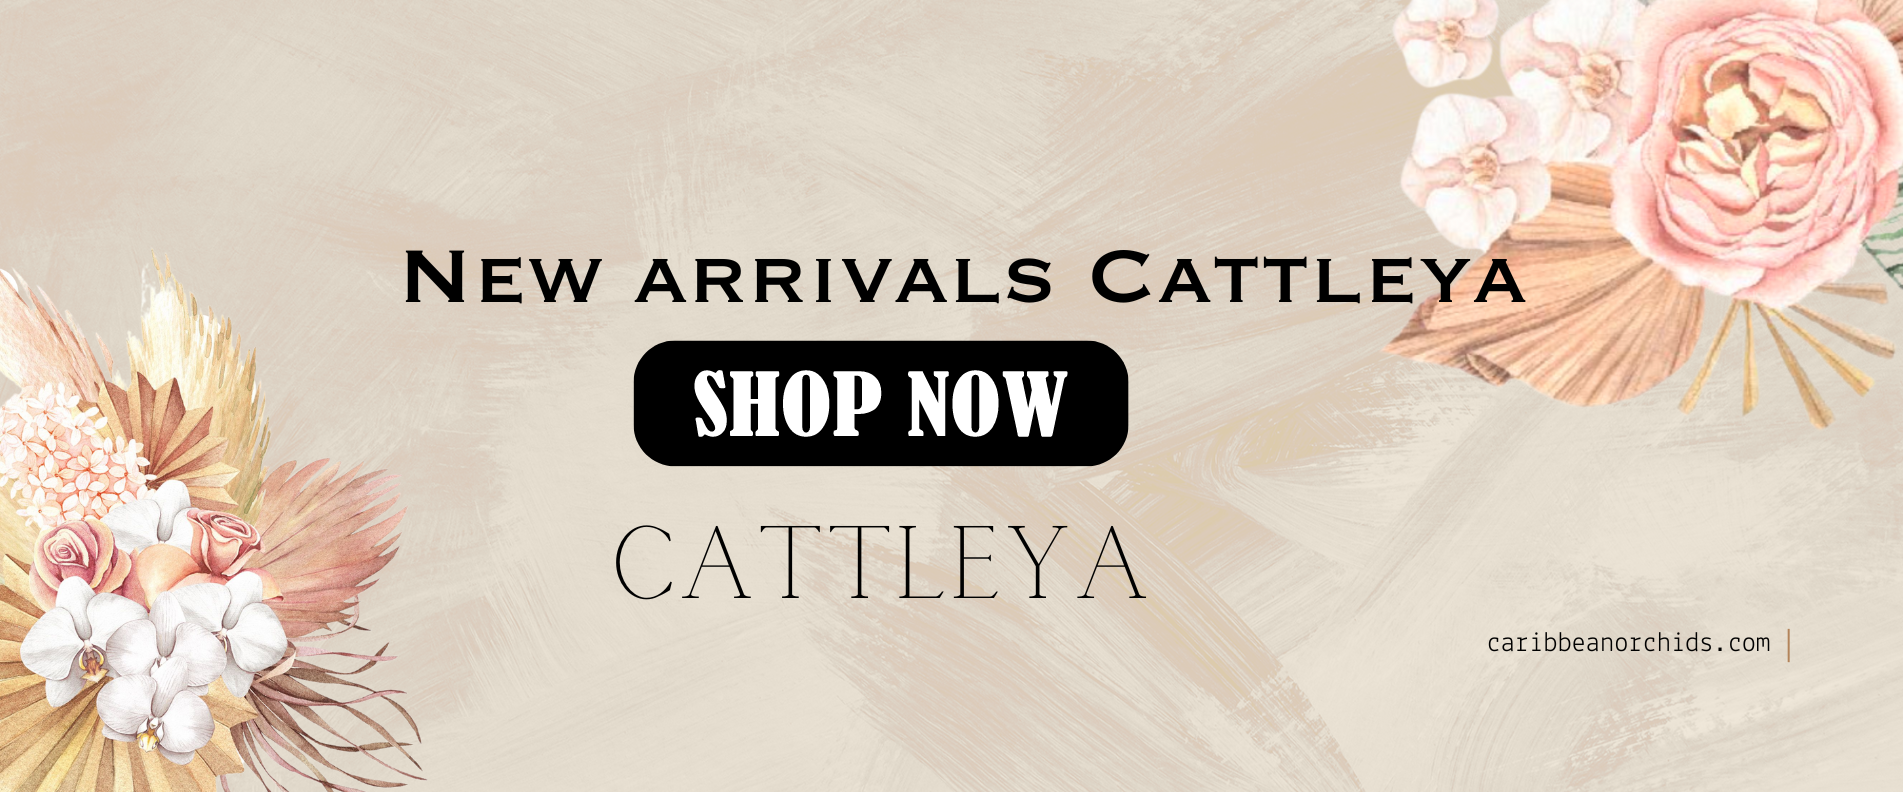 Cattleya-Banner